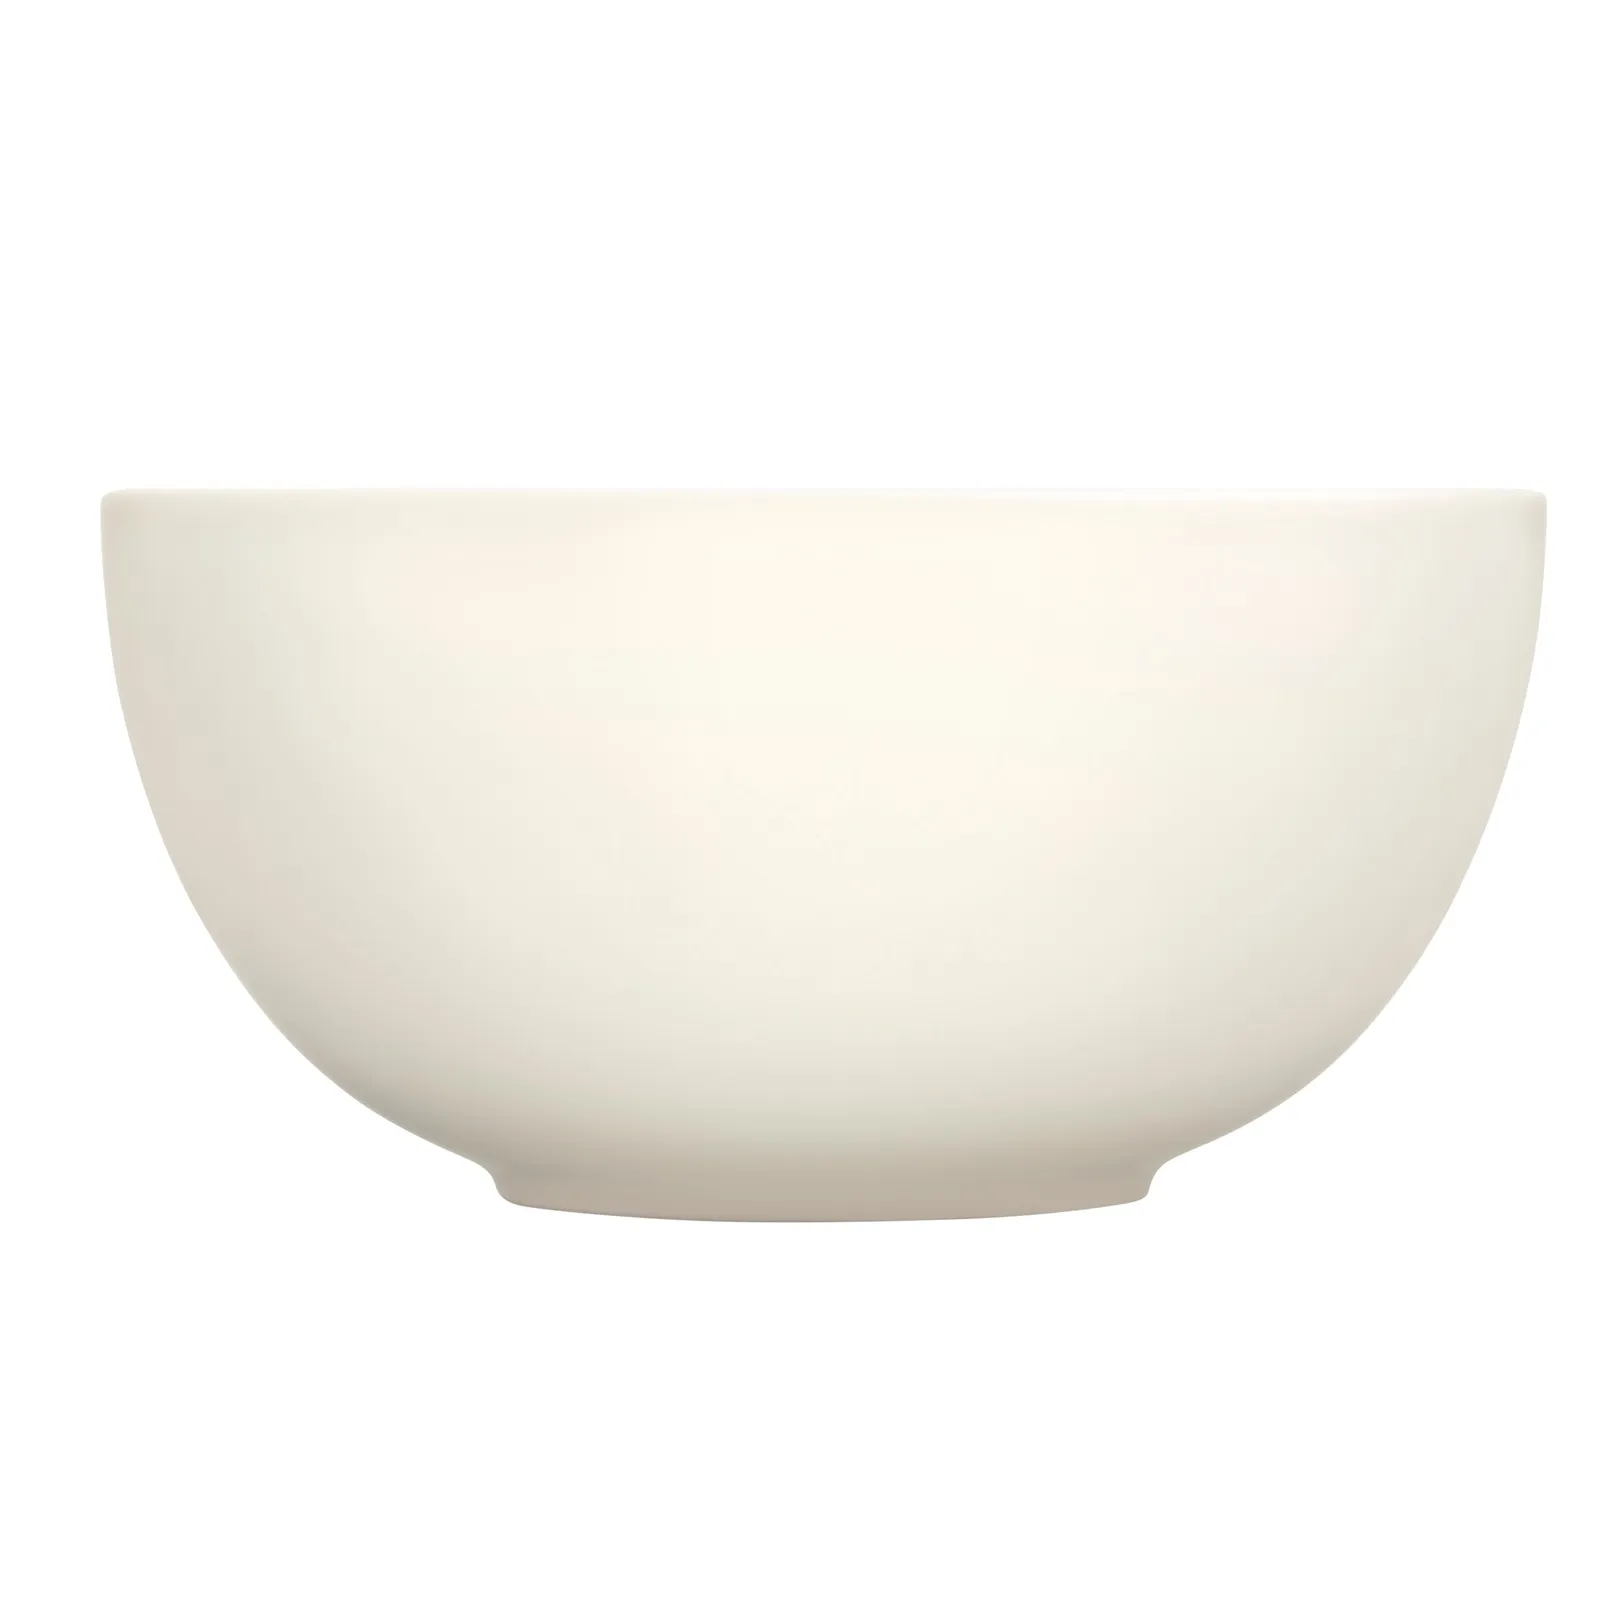 Iittala Teema salad bowl 3,4L white